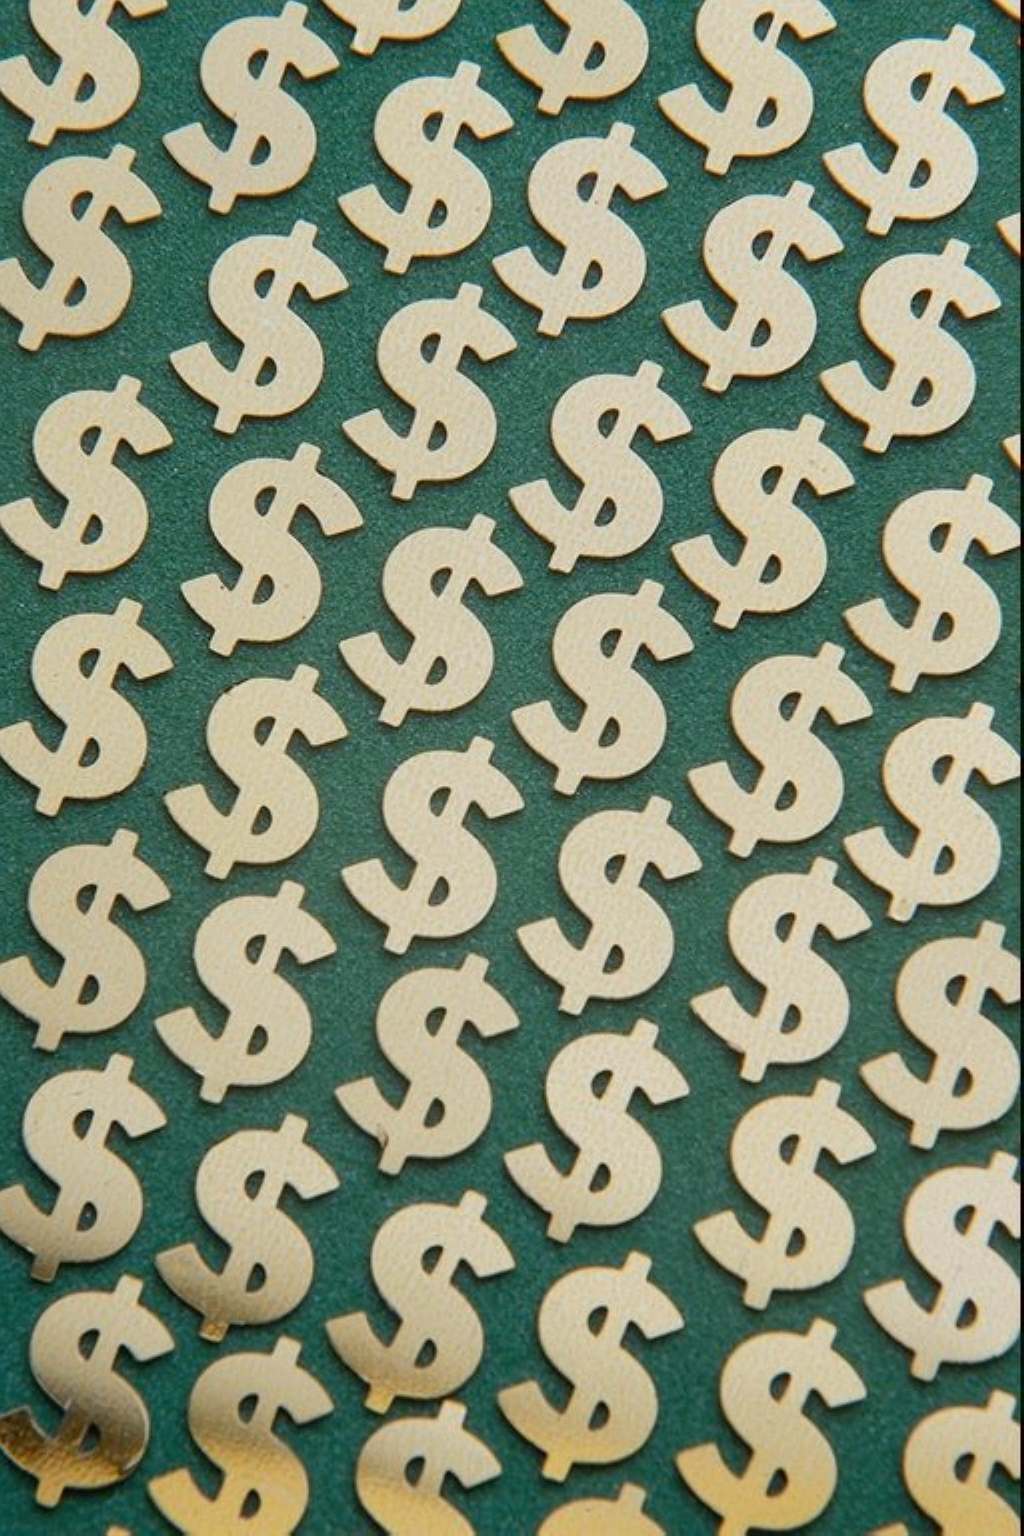 Money Background Twenty one Photo Texture & Background